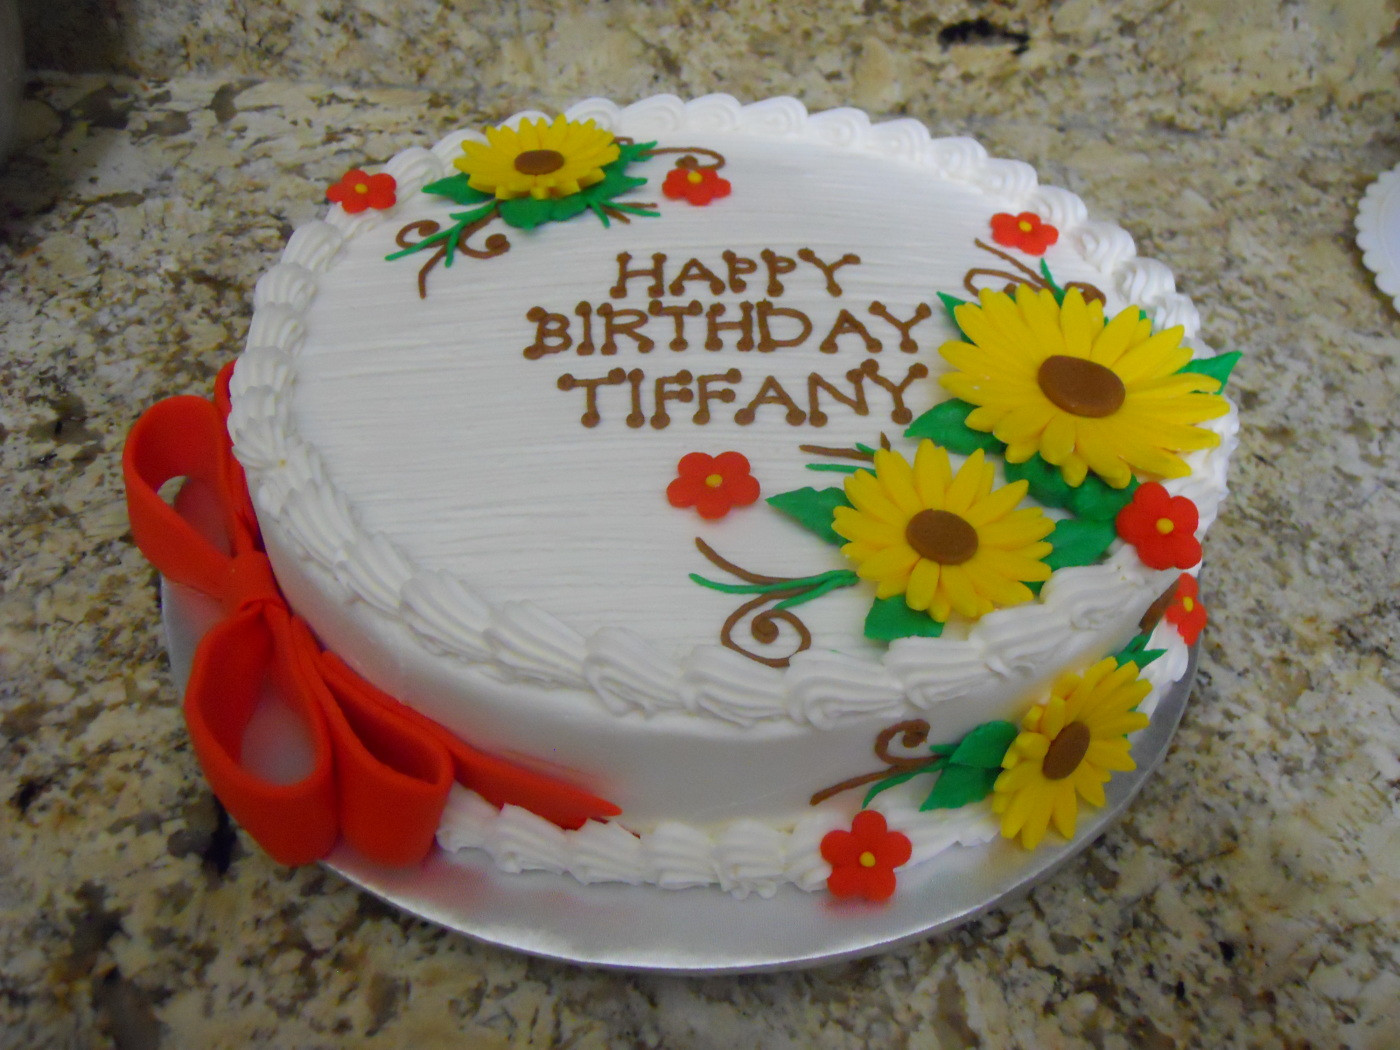 Best ideas about Round Birthday Cake
. Save or Pin 12 round Sunflower Birthday Cake Cake Decorating Now.